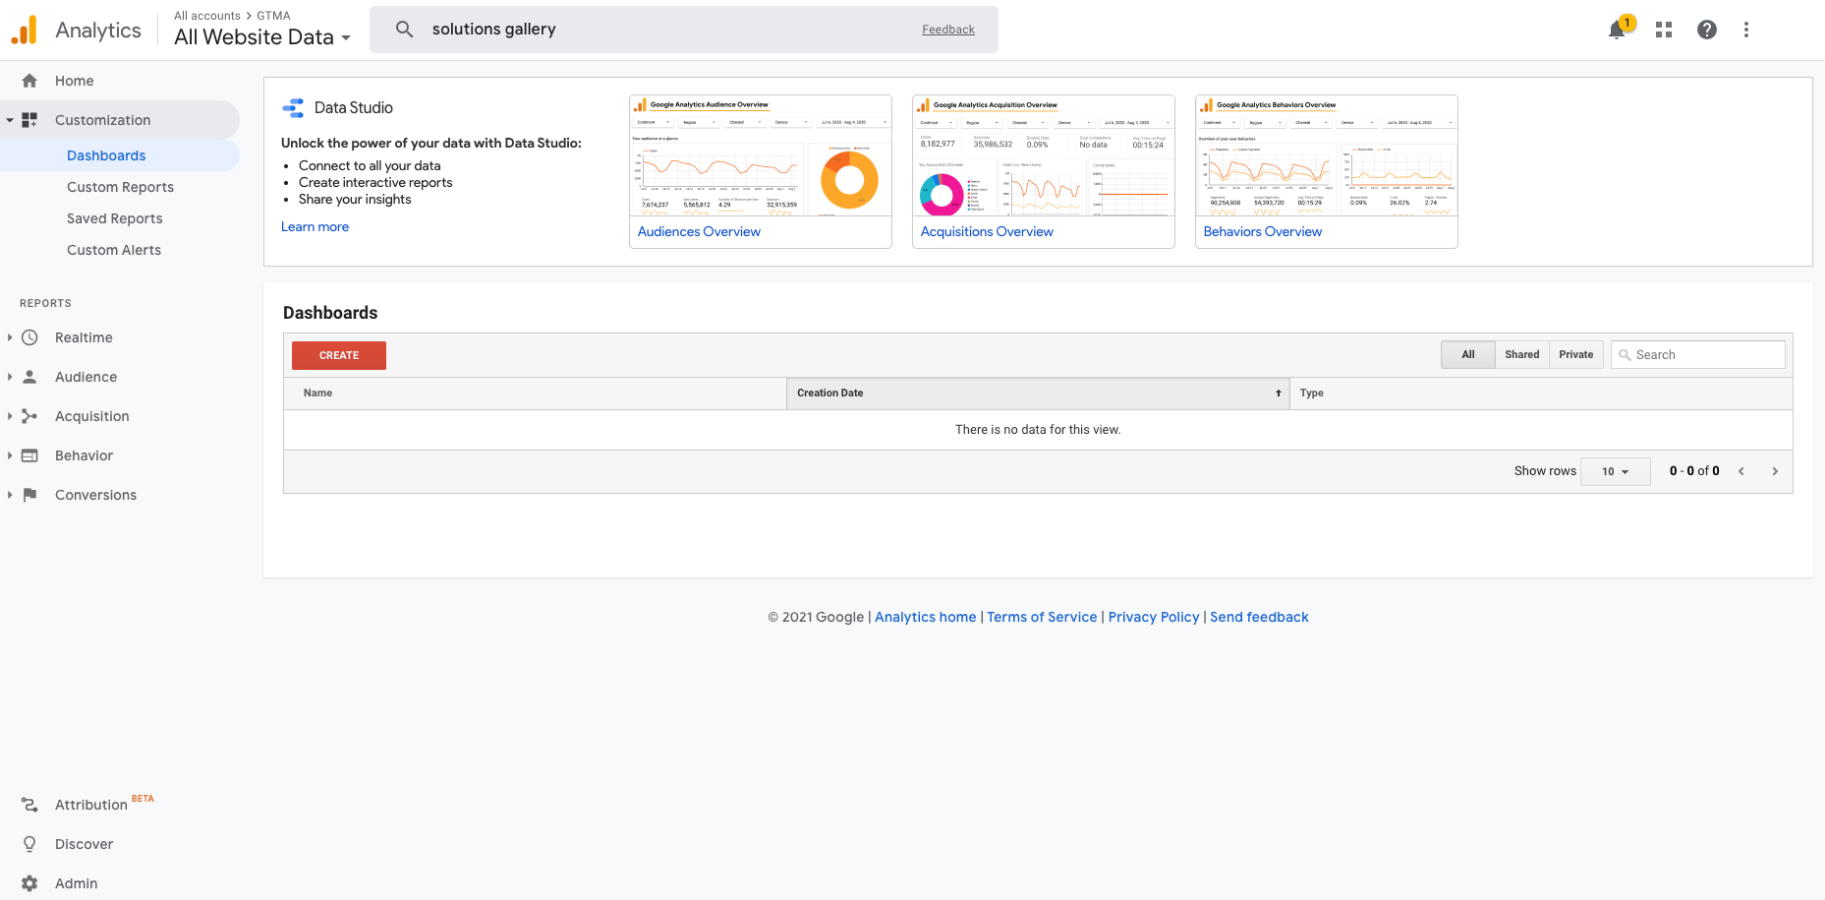 Screenshot of the Google Analytics Solutions Gallery